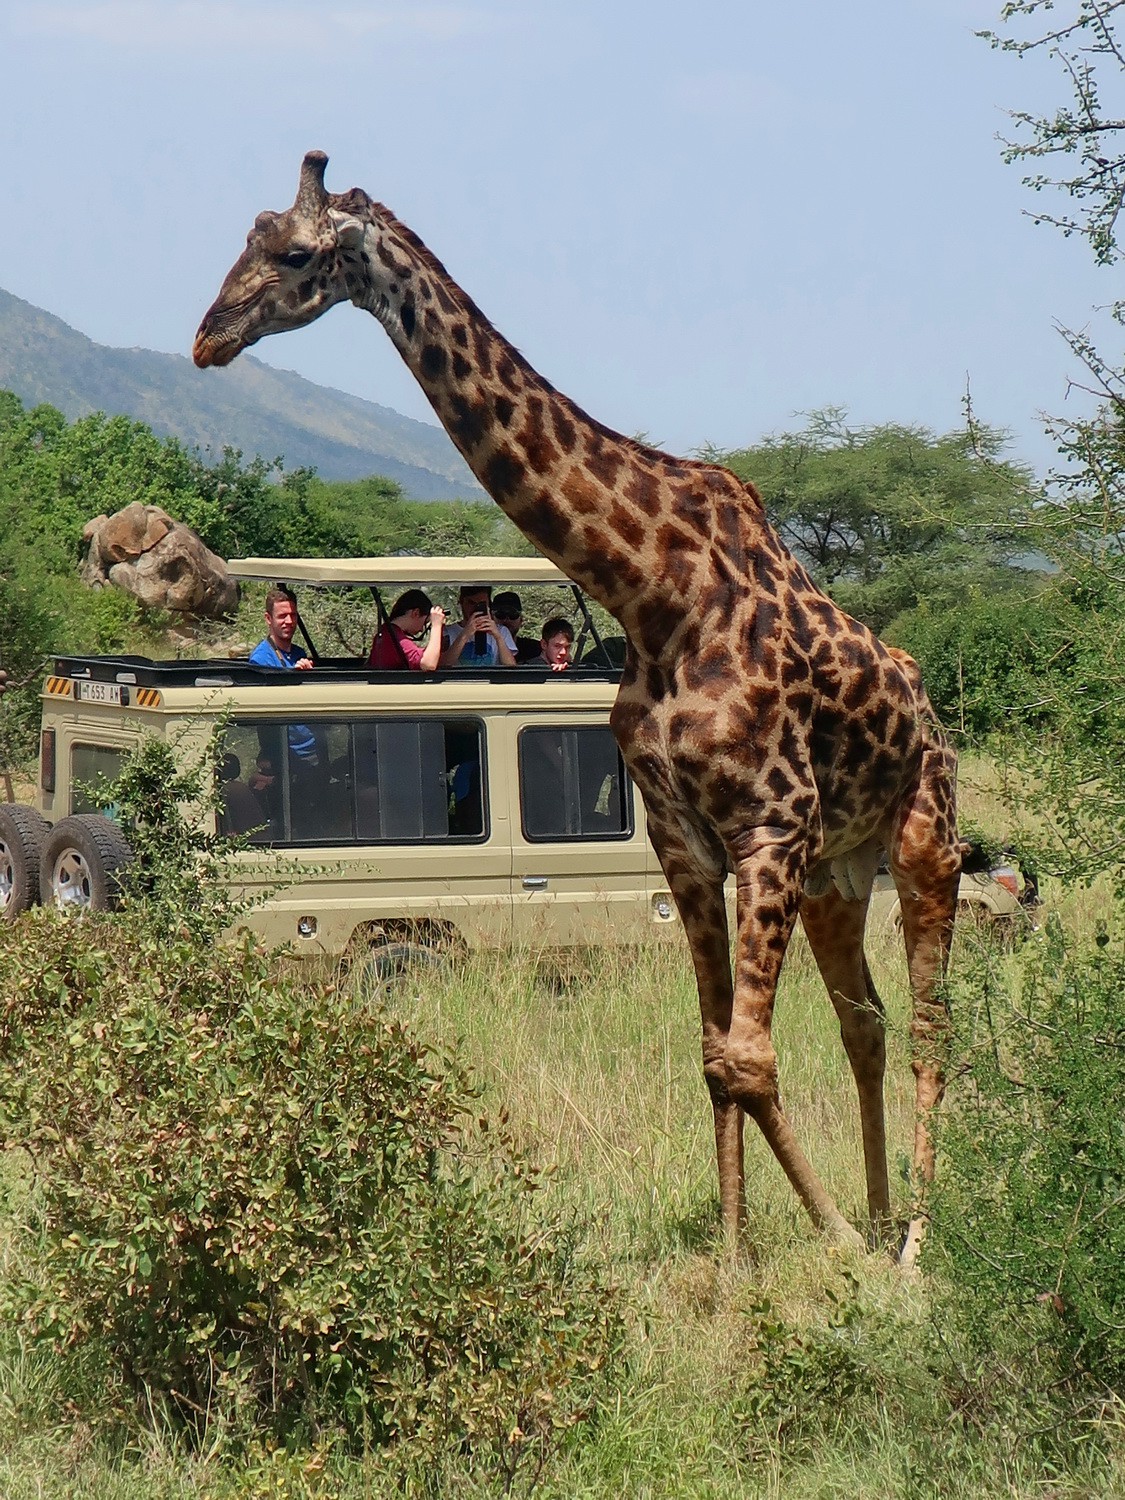 Giraffe with a typical Safari car